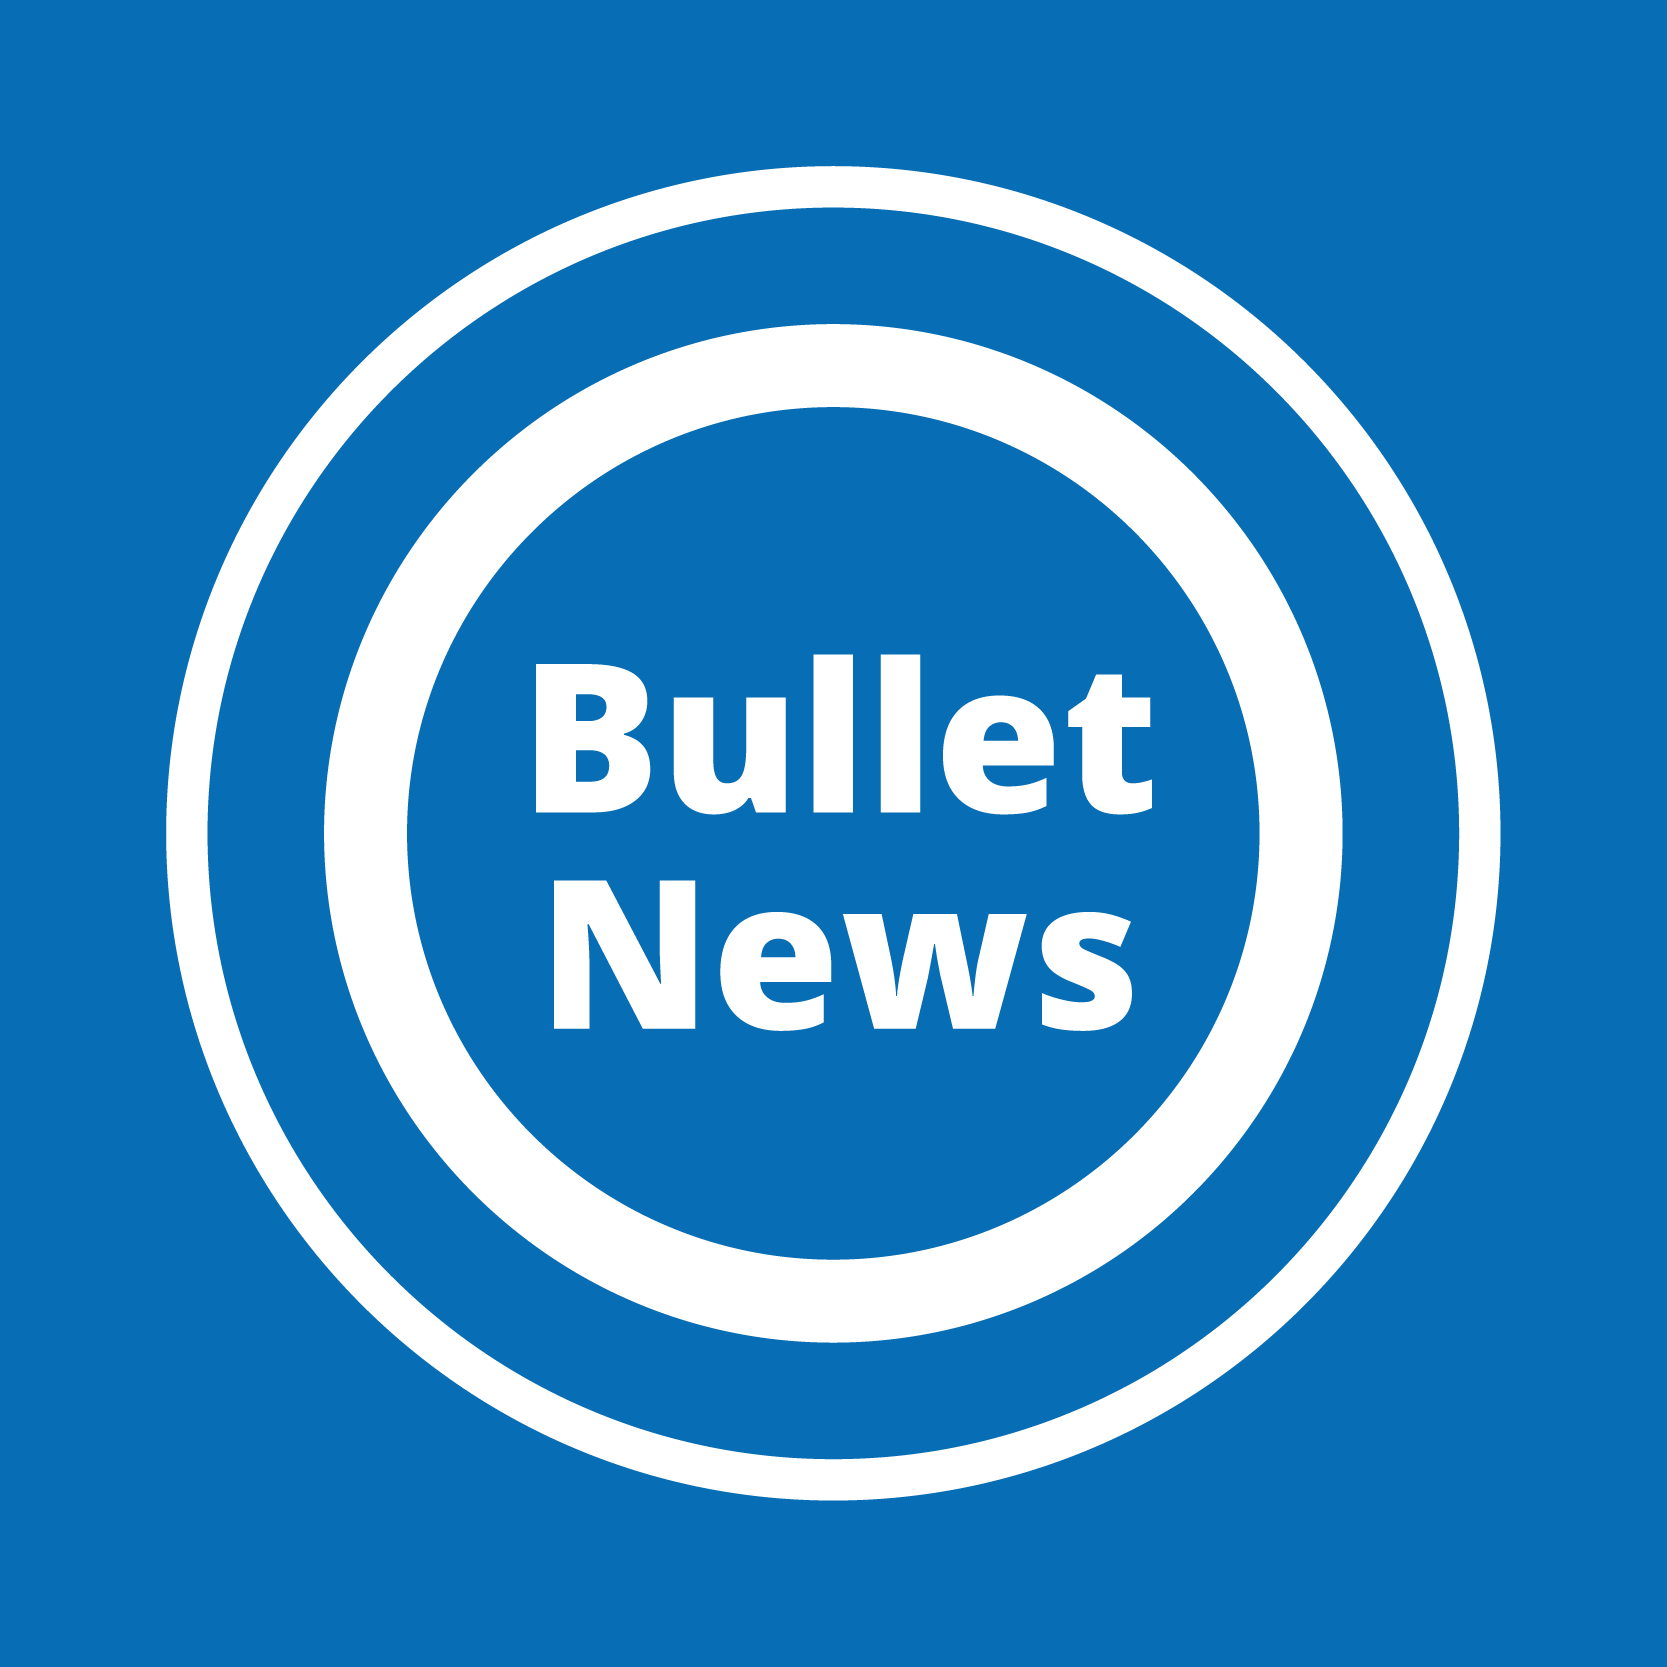 Bulletnews - Bullet News (1667x1667), Png Download